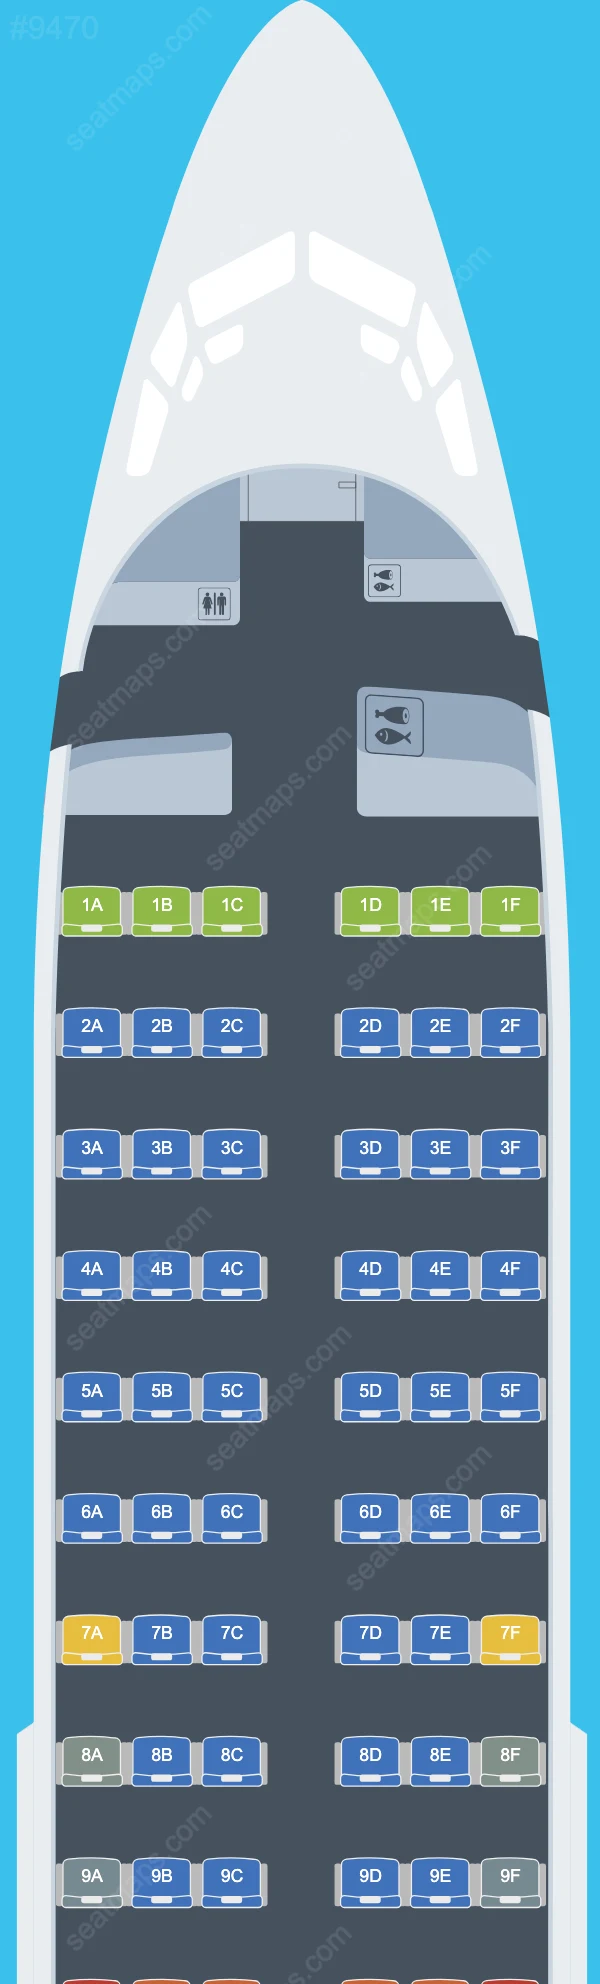 Bahamasair Boeing 737 Seat Maps 737-700 V.1